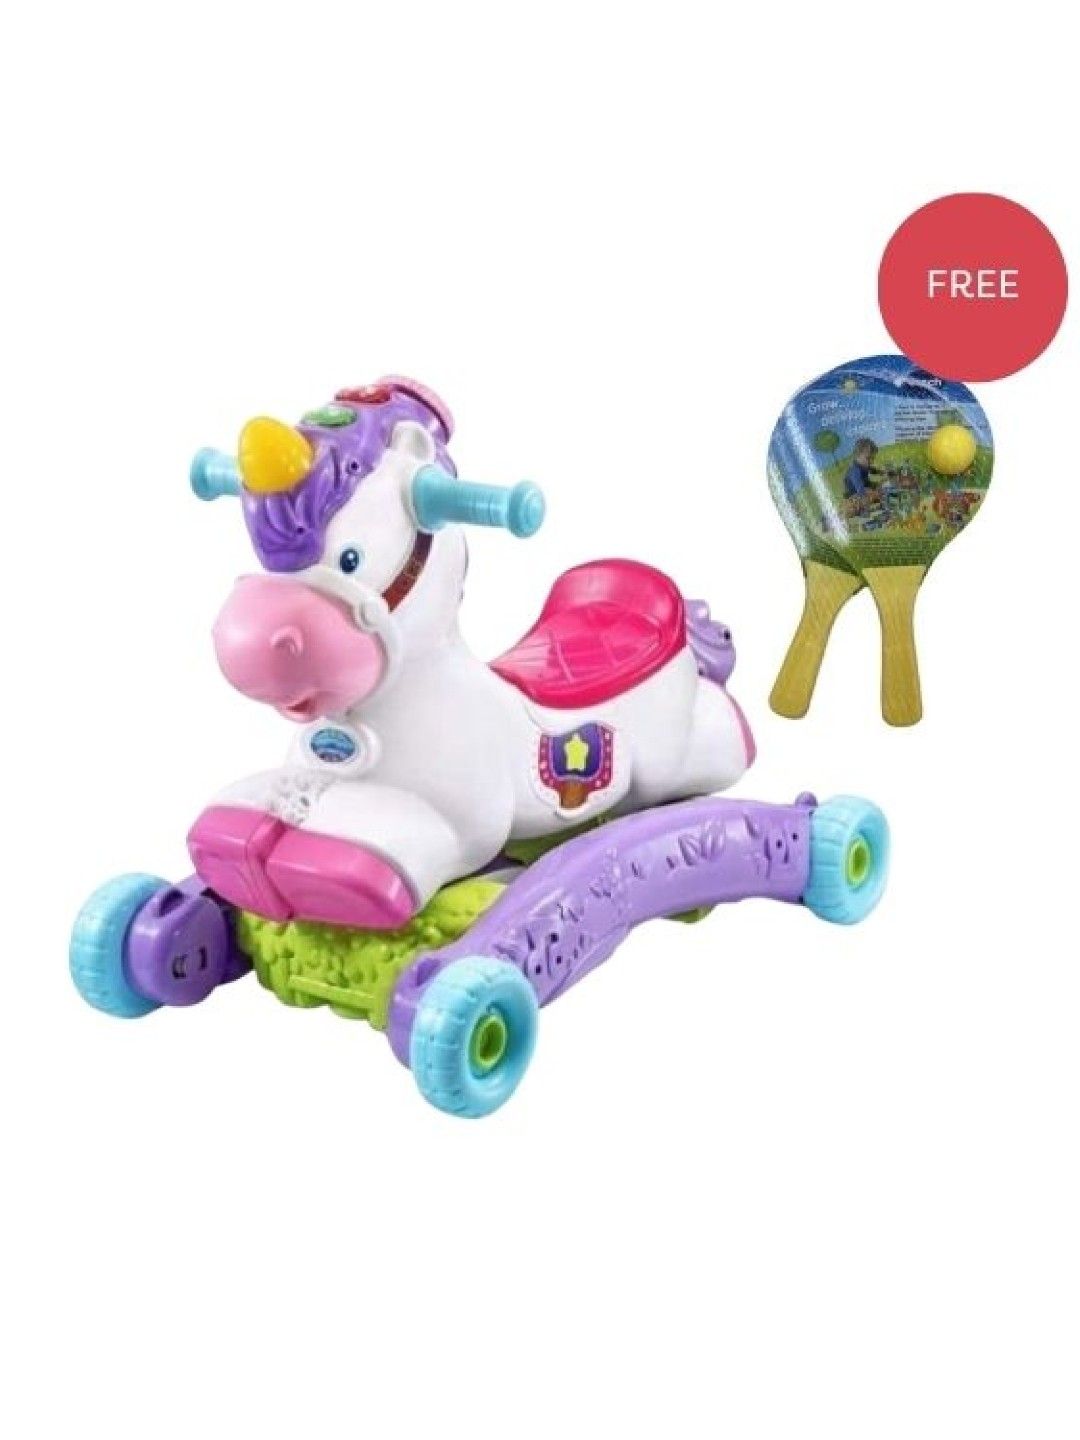 VTech Rock & Ride Unicorn / Kids Horse Rocker Toy with FREE Ping Pong Balls